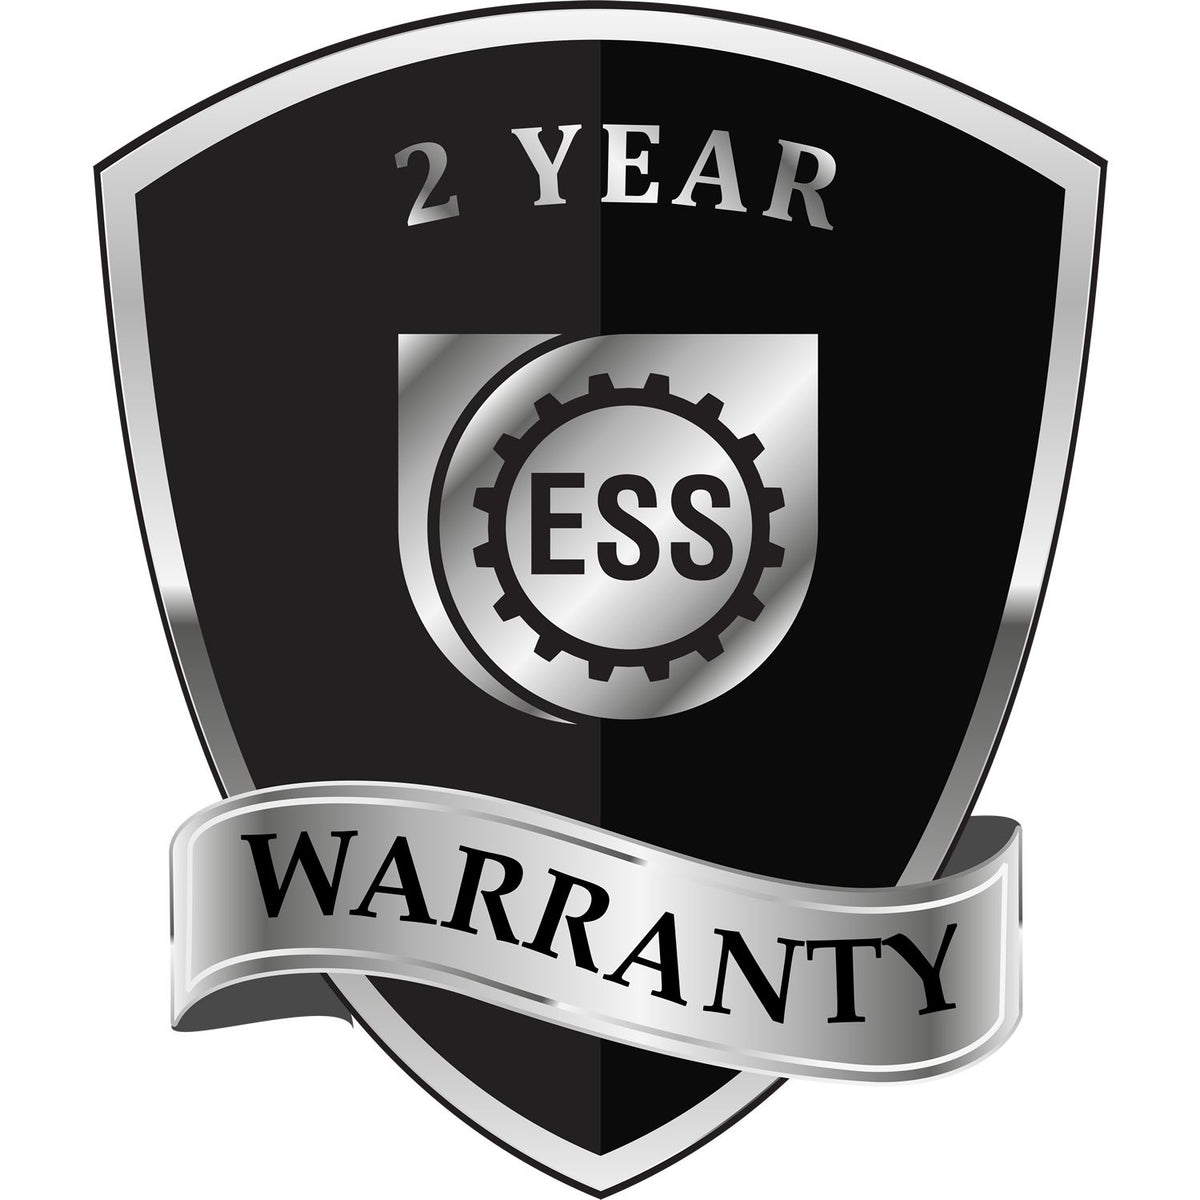 A black and silver badge or emblem showing warranty information for the Delaware Geologist Desk Seal